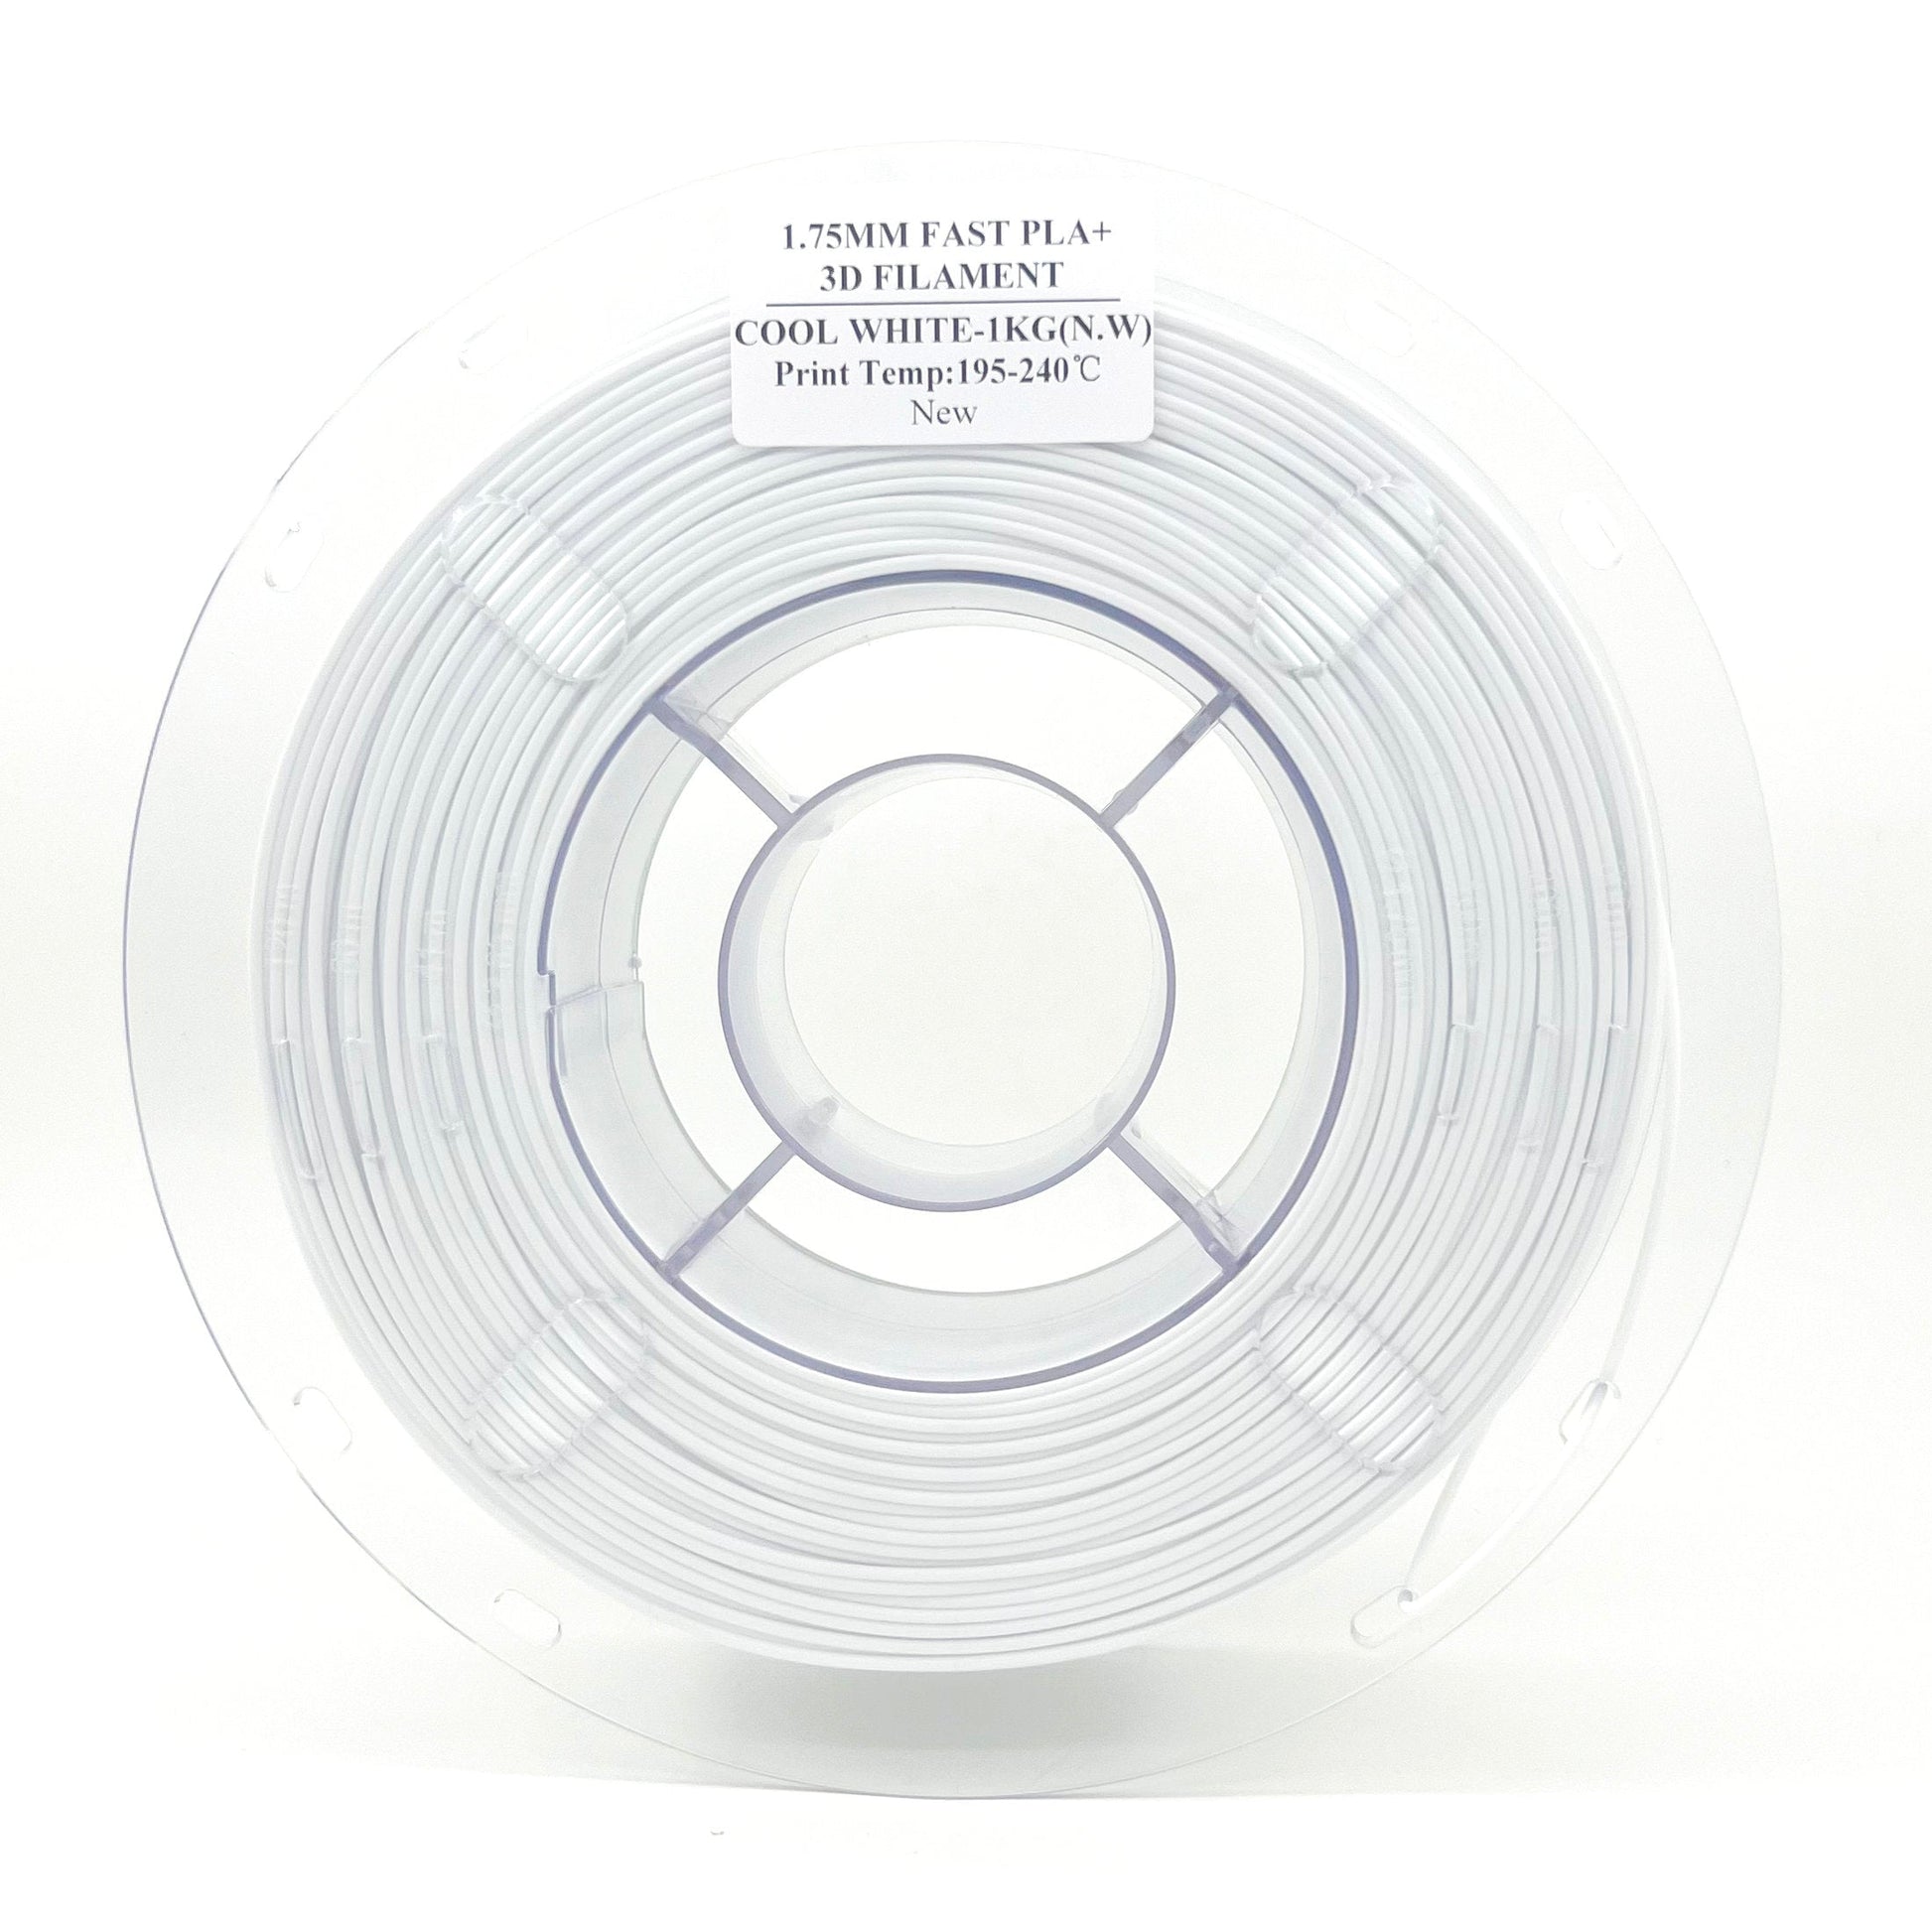 Wholesale Case eSUN 1.75 mm PLA+ (10 spools in a case) – INTSERVO 3D  Printing Store